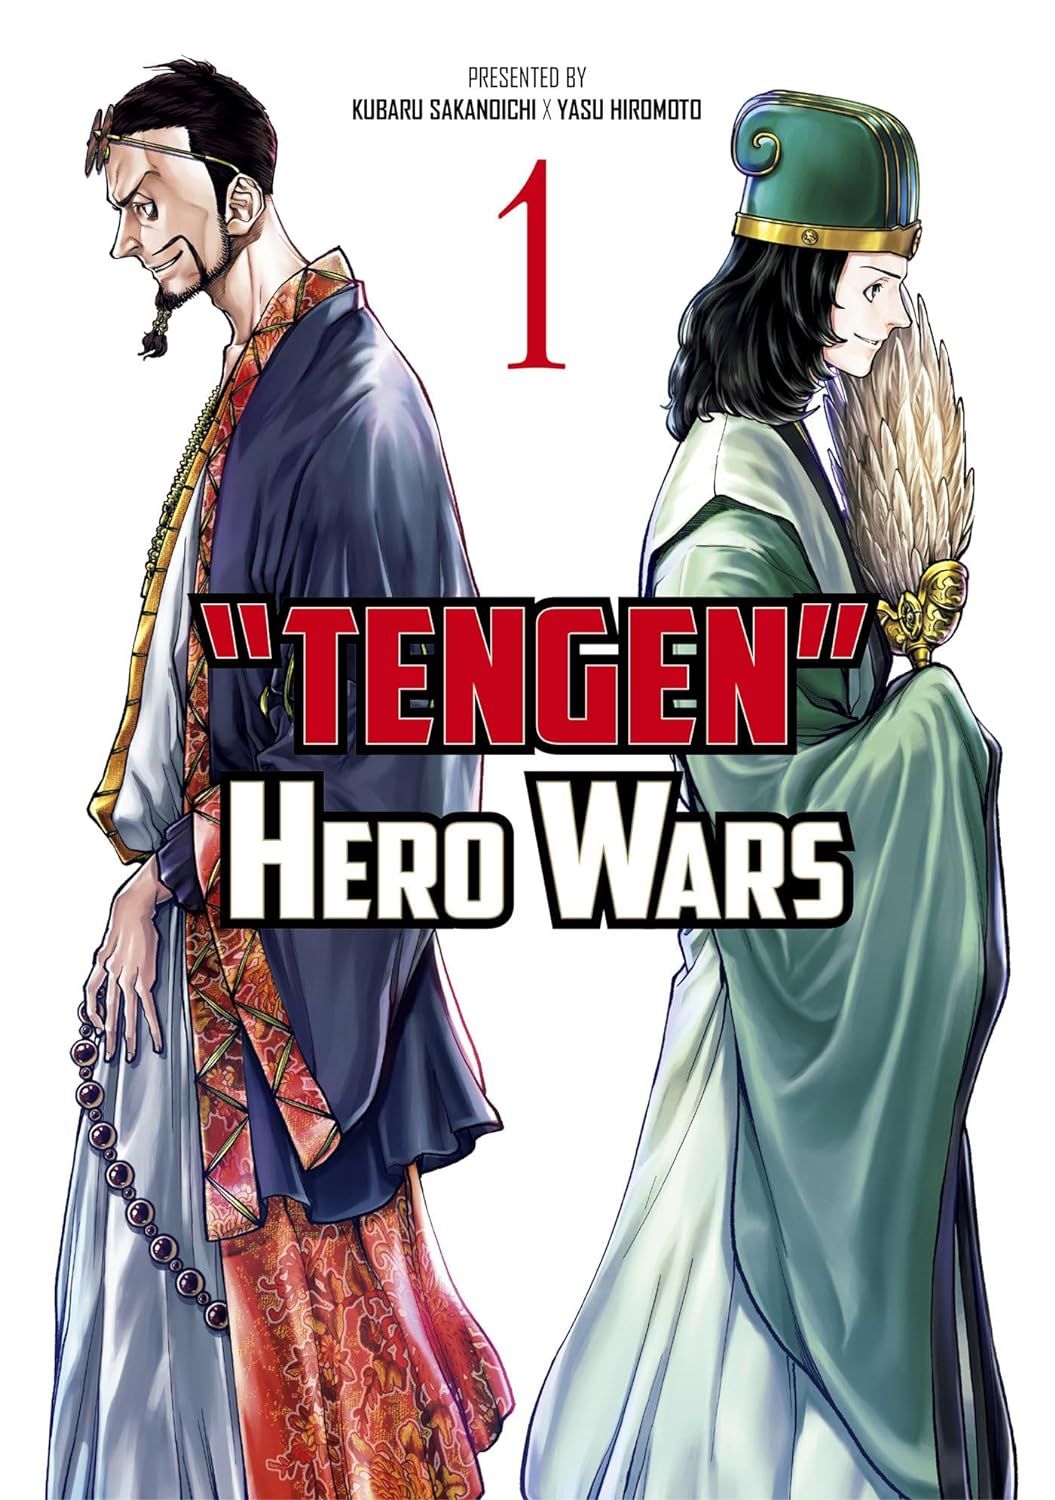 Tengen Hero Wars by Yasu Hiromoto and Kubaru Sakanoichi cover